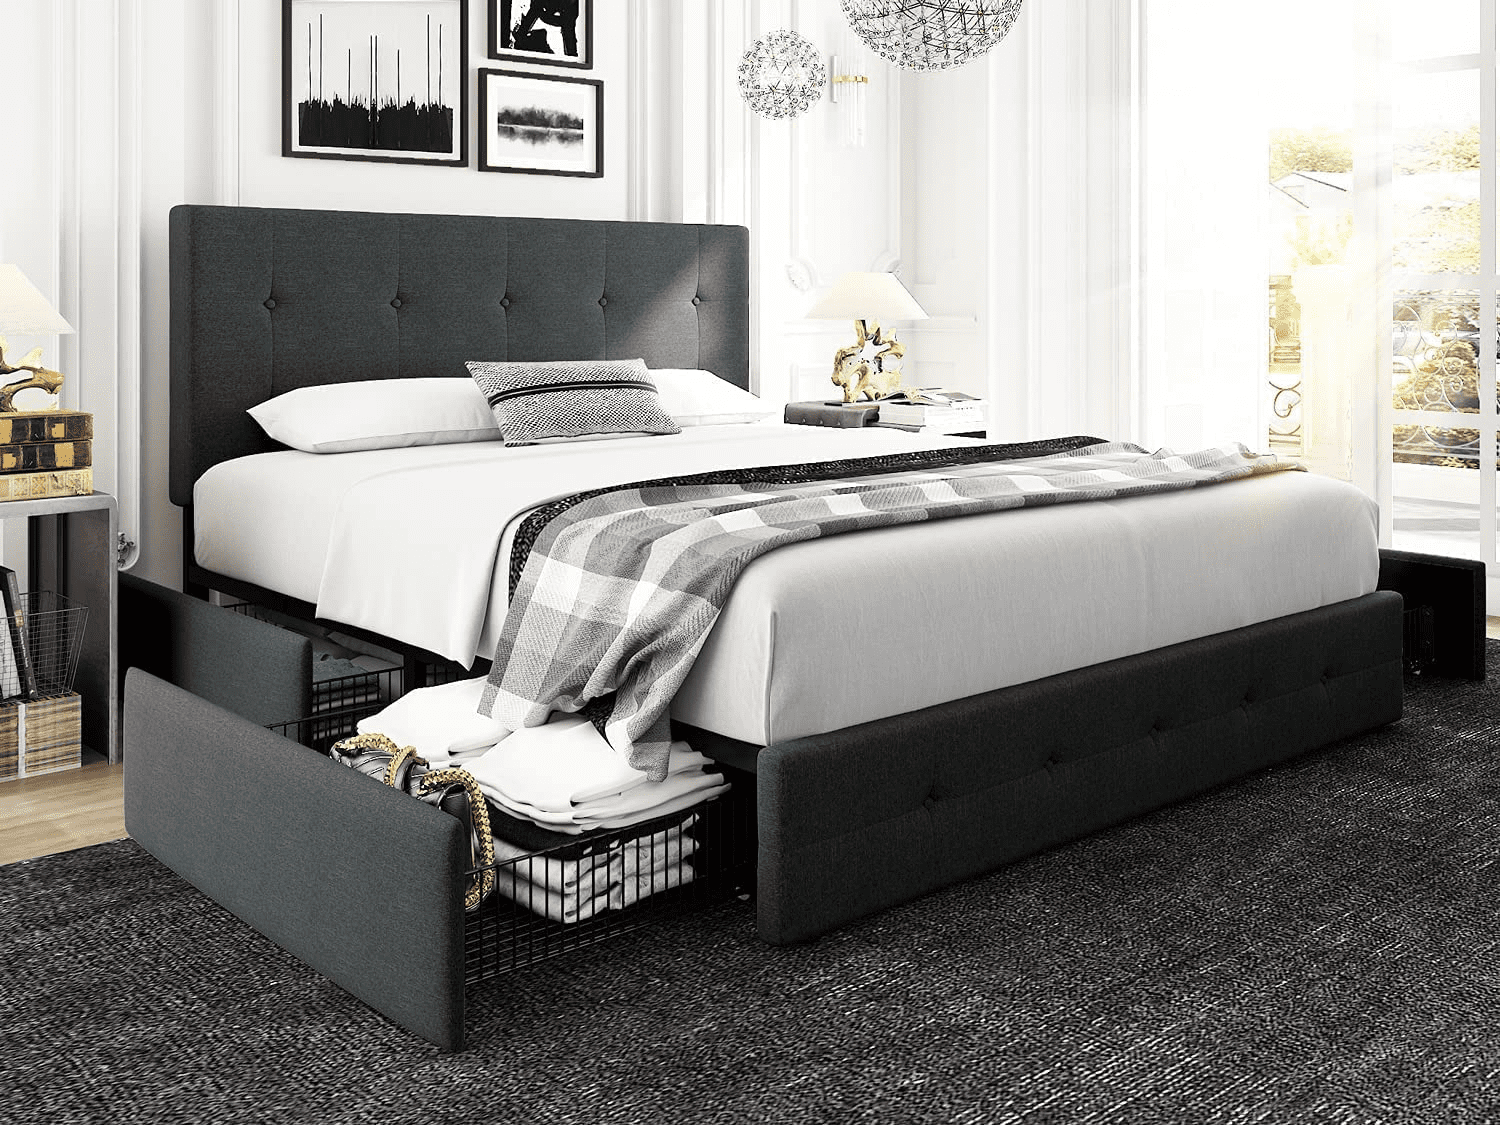 ® Metal Bed with Mattress 160x200cm Black Bed Frame Double Bed EN. Casa show original title Details about    